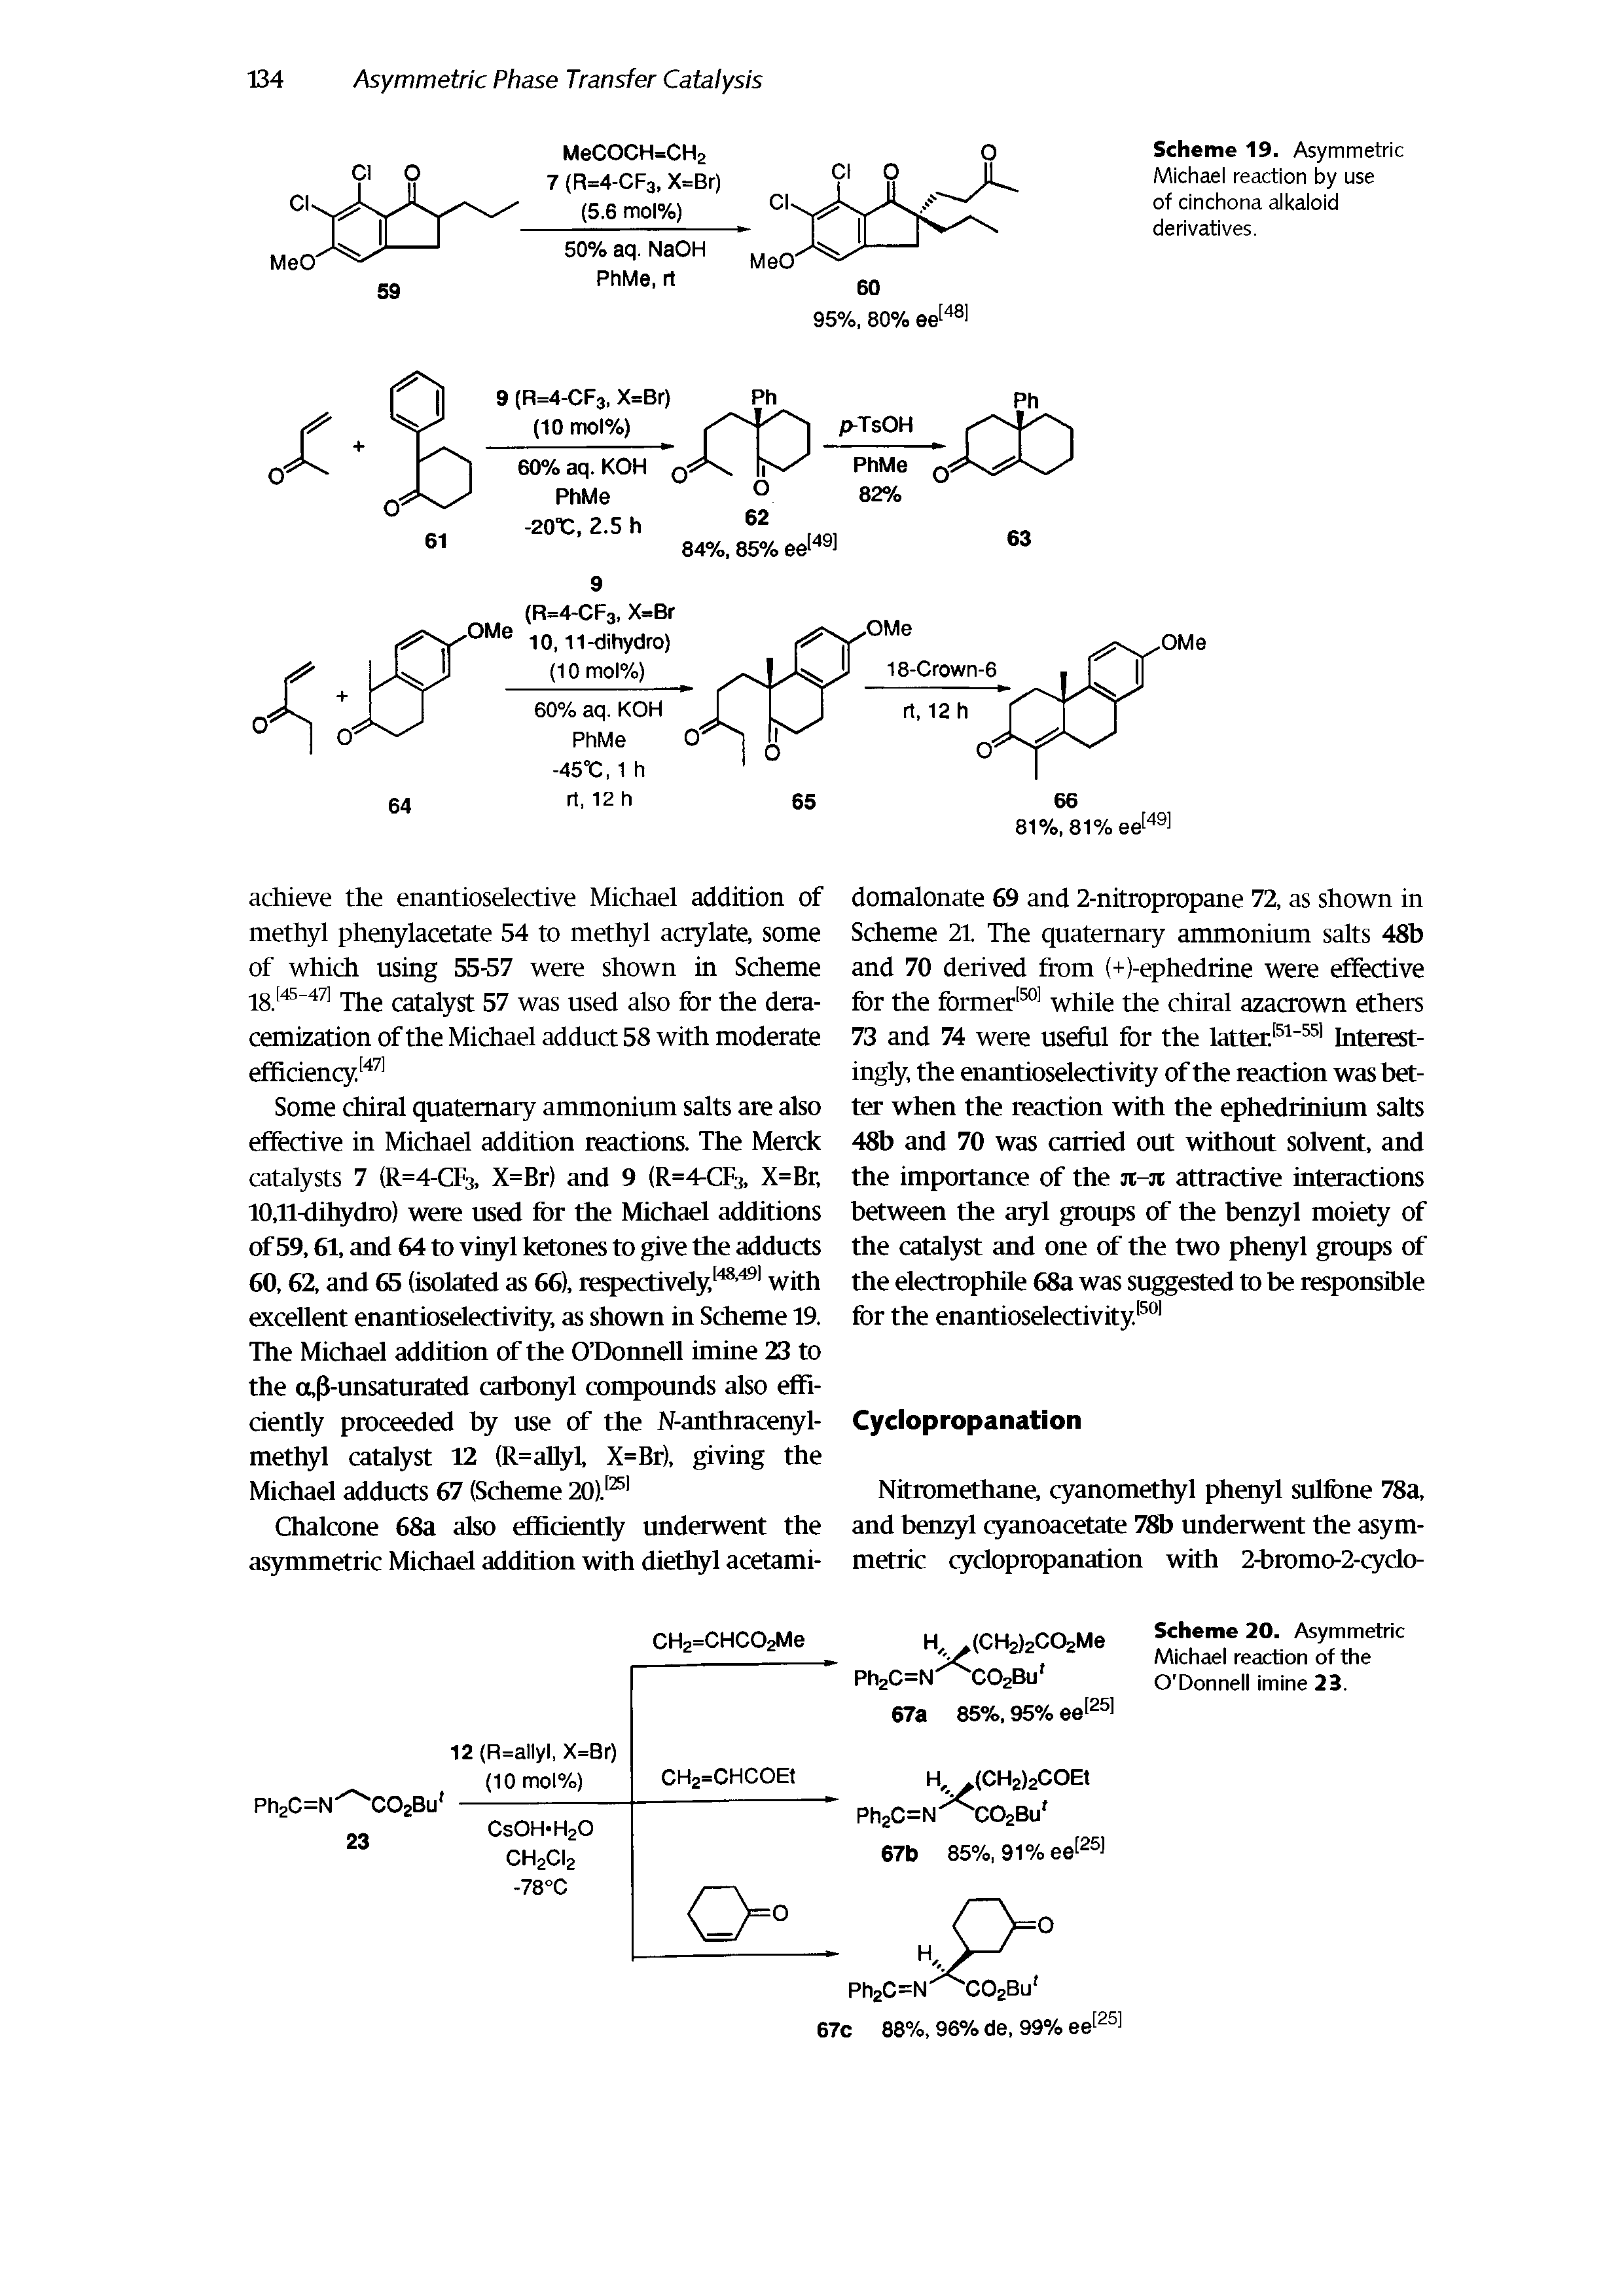 Scheme 19. Asymmetric Michael reaction by use of cinchona alkaloid derivatives.